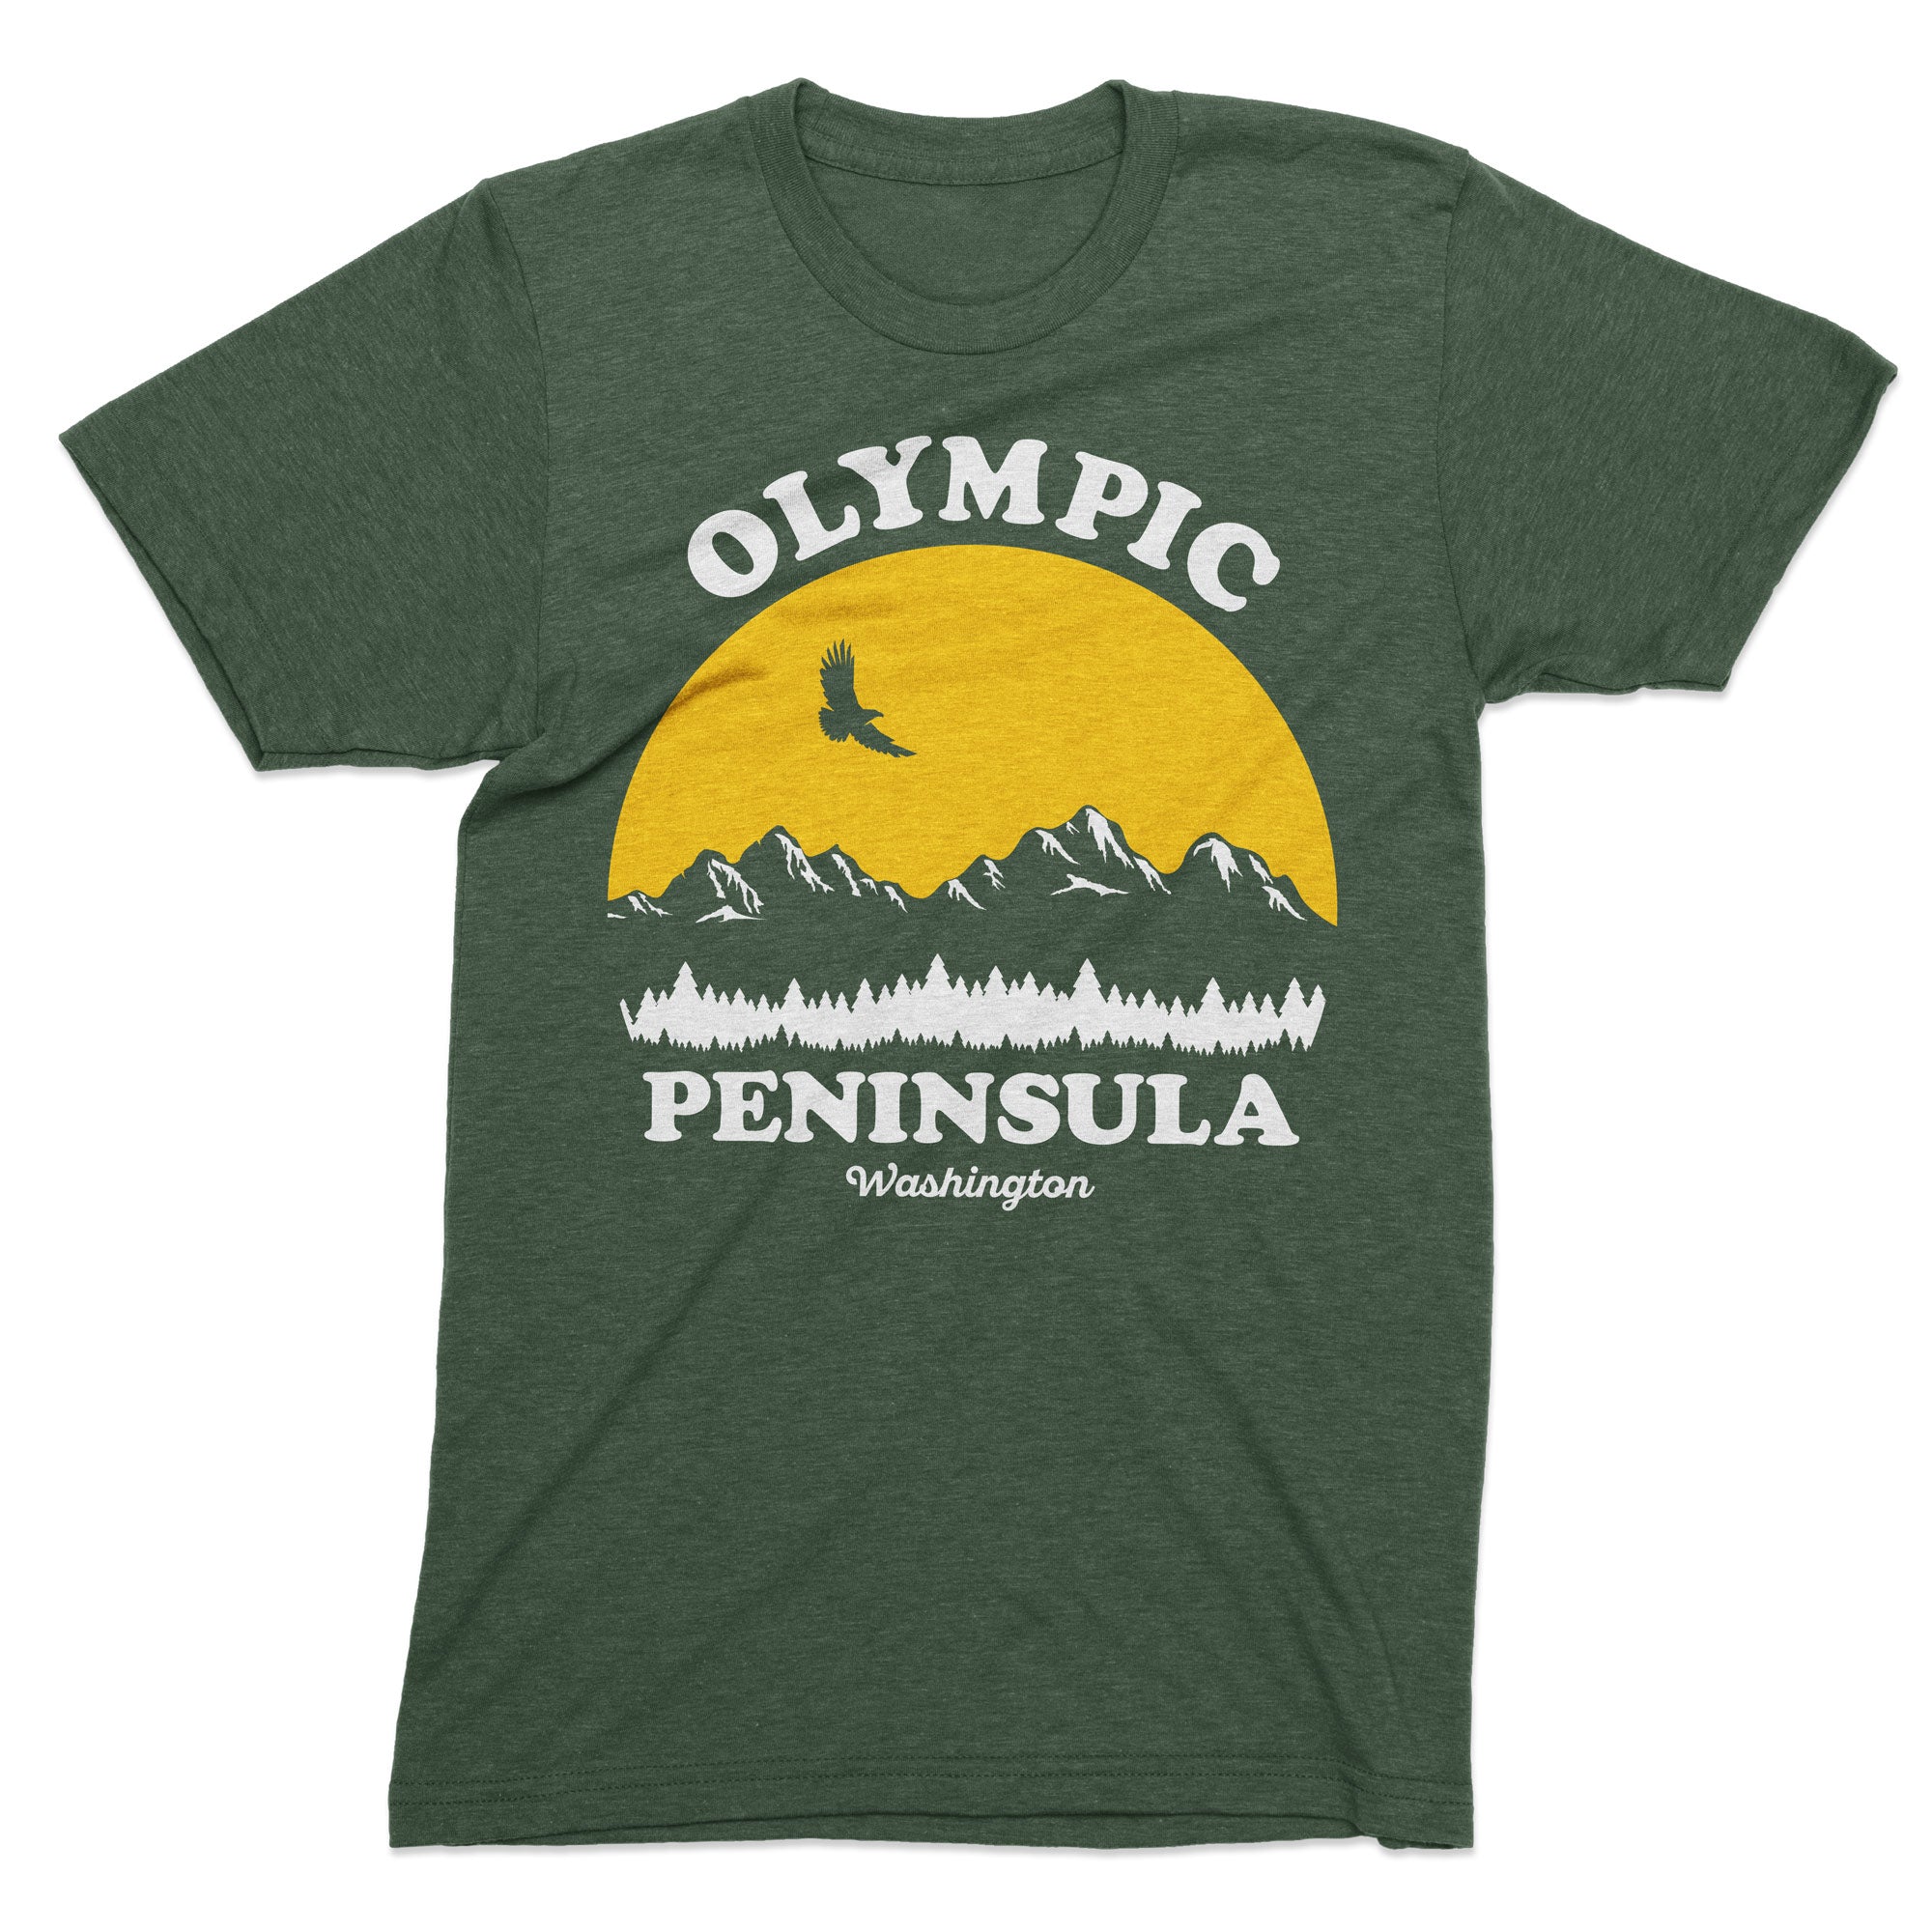 Olympic Peninsula Old School tshirt - Viaduct